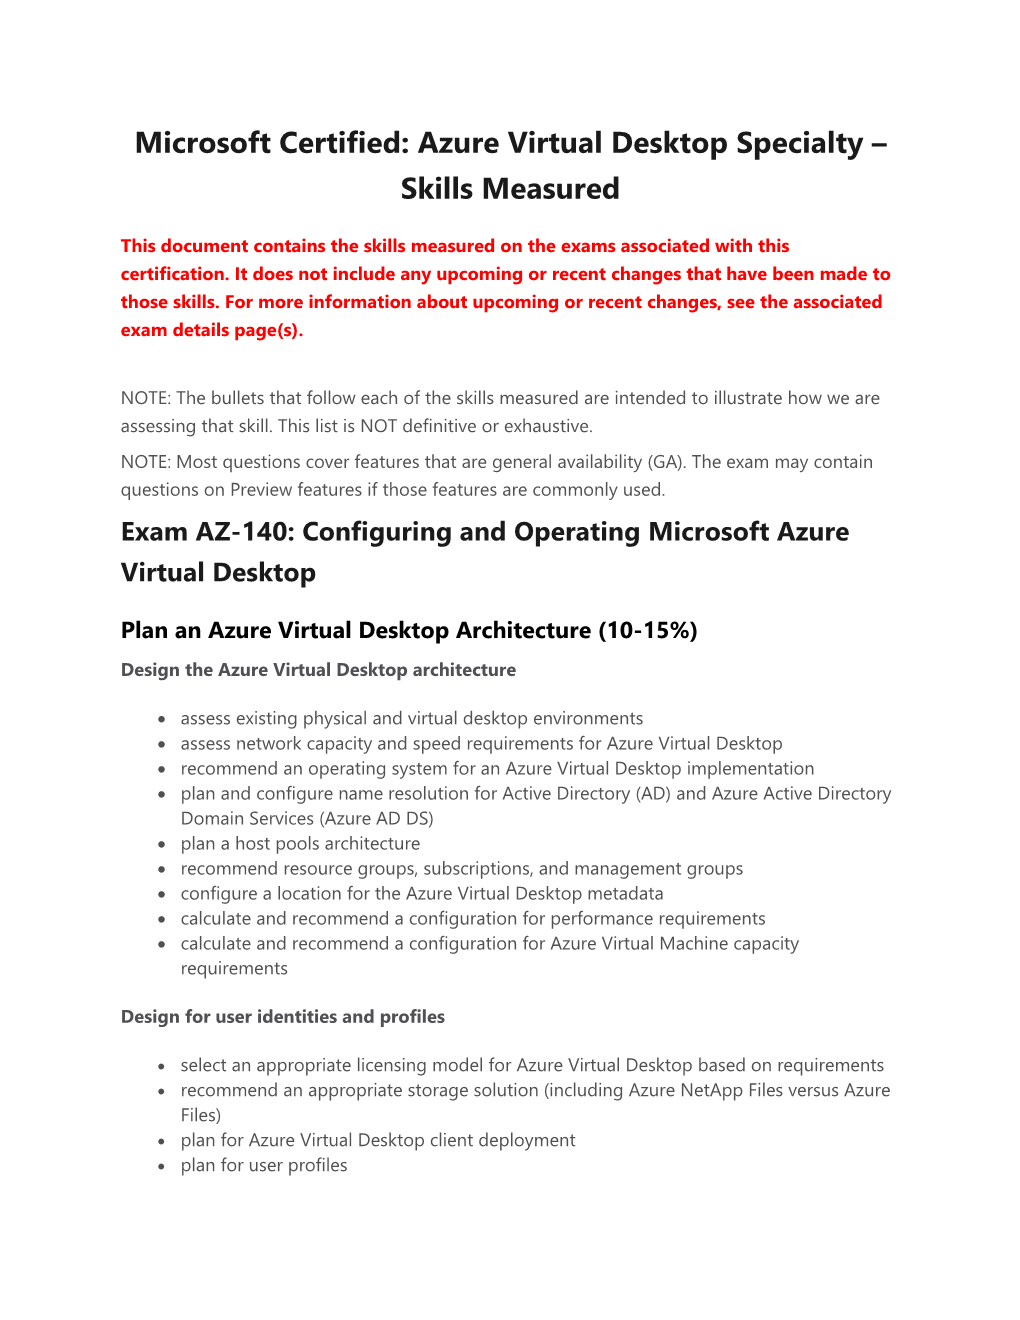 Microsoft Certified: Azure Virtual Desktop Specialty – Skills Measured